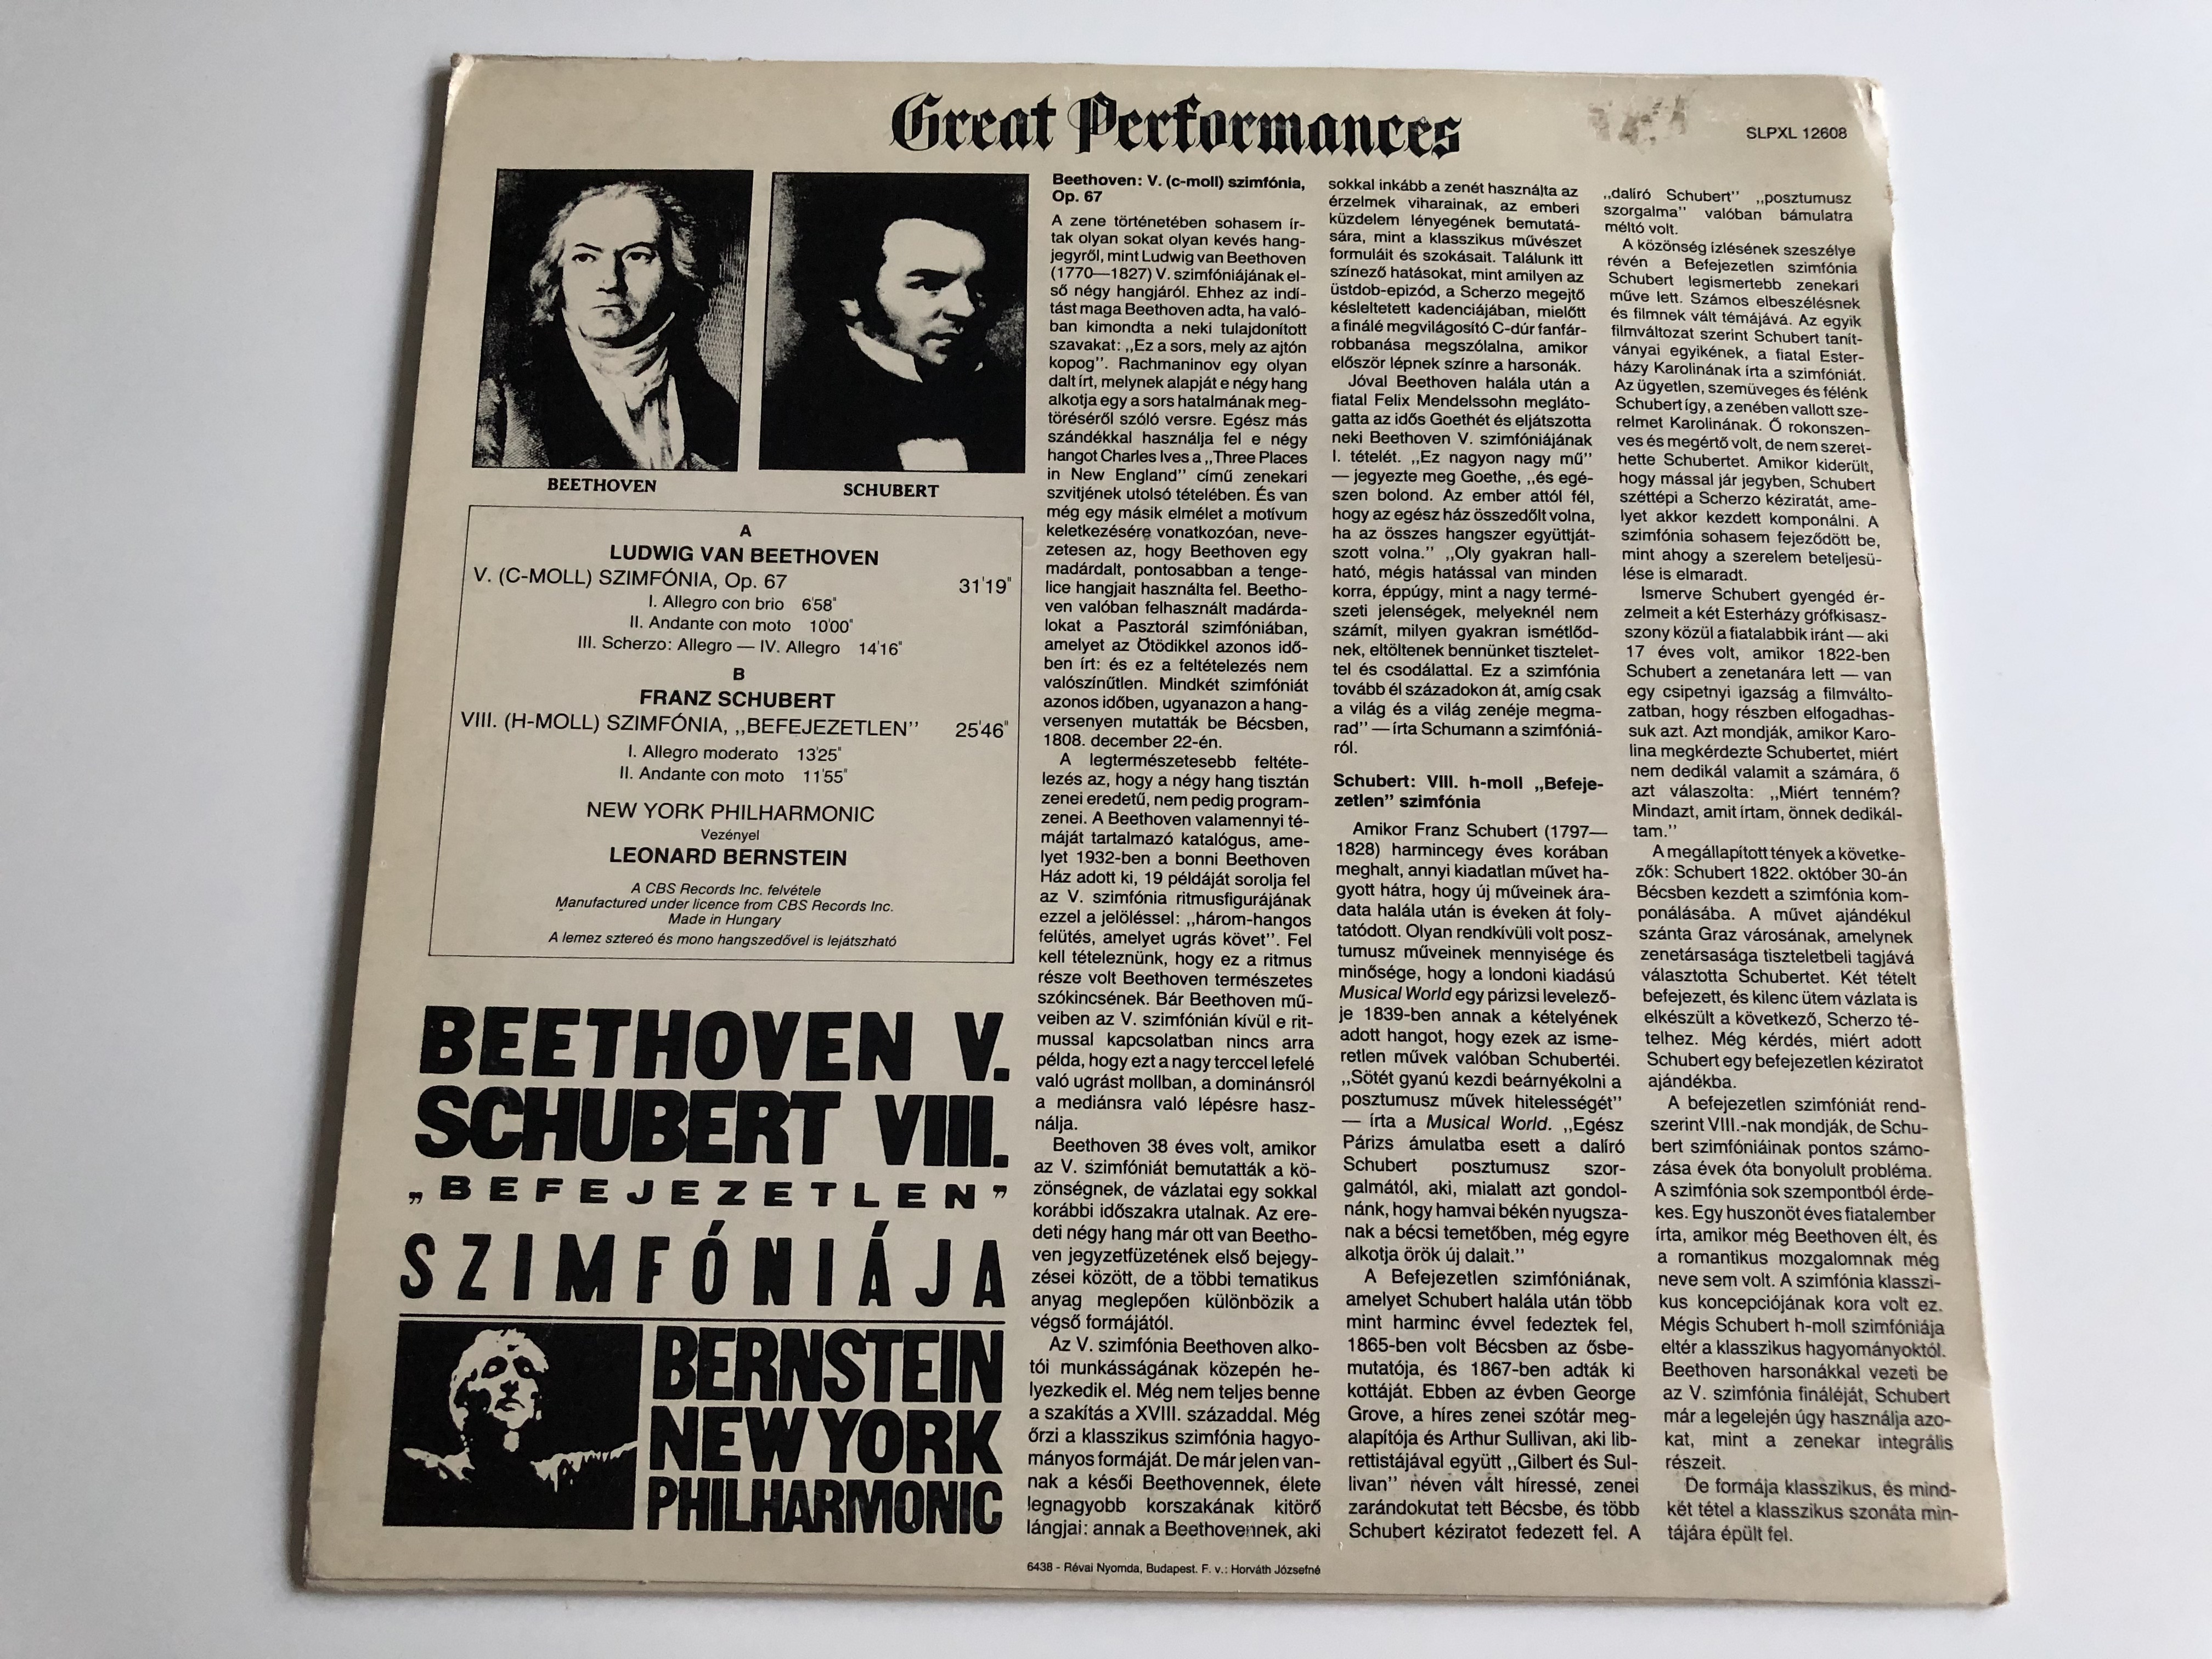 beethoven-v.-schubert-viii.-befejezetlen-szimfoniaja-bernstein-new-york-philharmonic-hungaroton-lp-stereo-slpxl-12608-2-.jpg